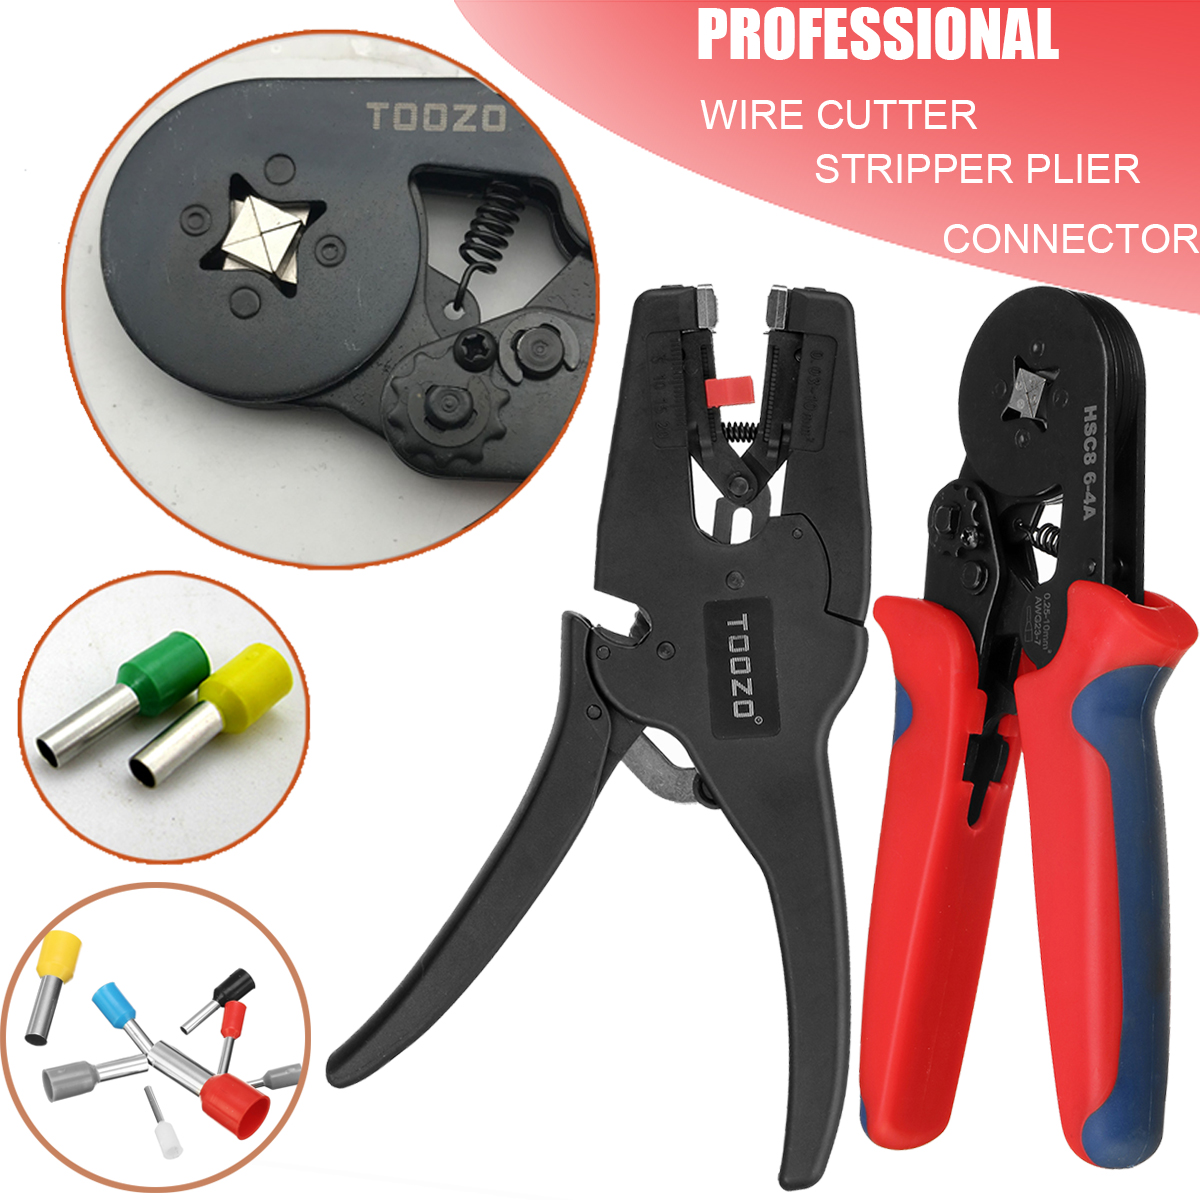 Professional-Crimper-Plier-Wire-Cutter-Stripper-1200Pcs-Electrical-Crimp-Terminals-1450329-2